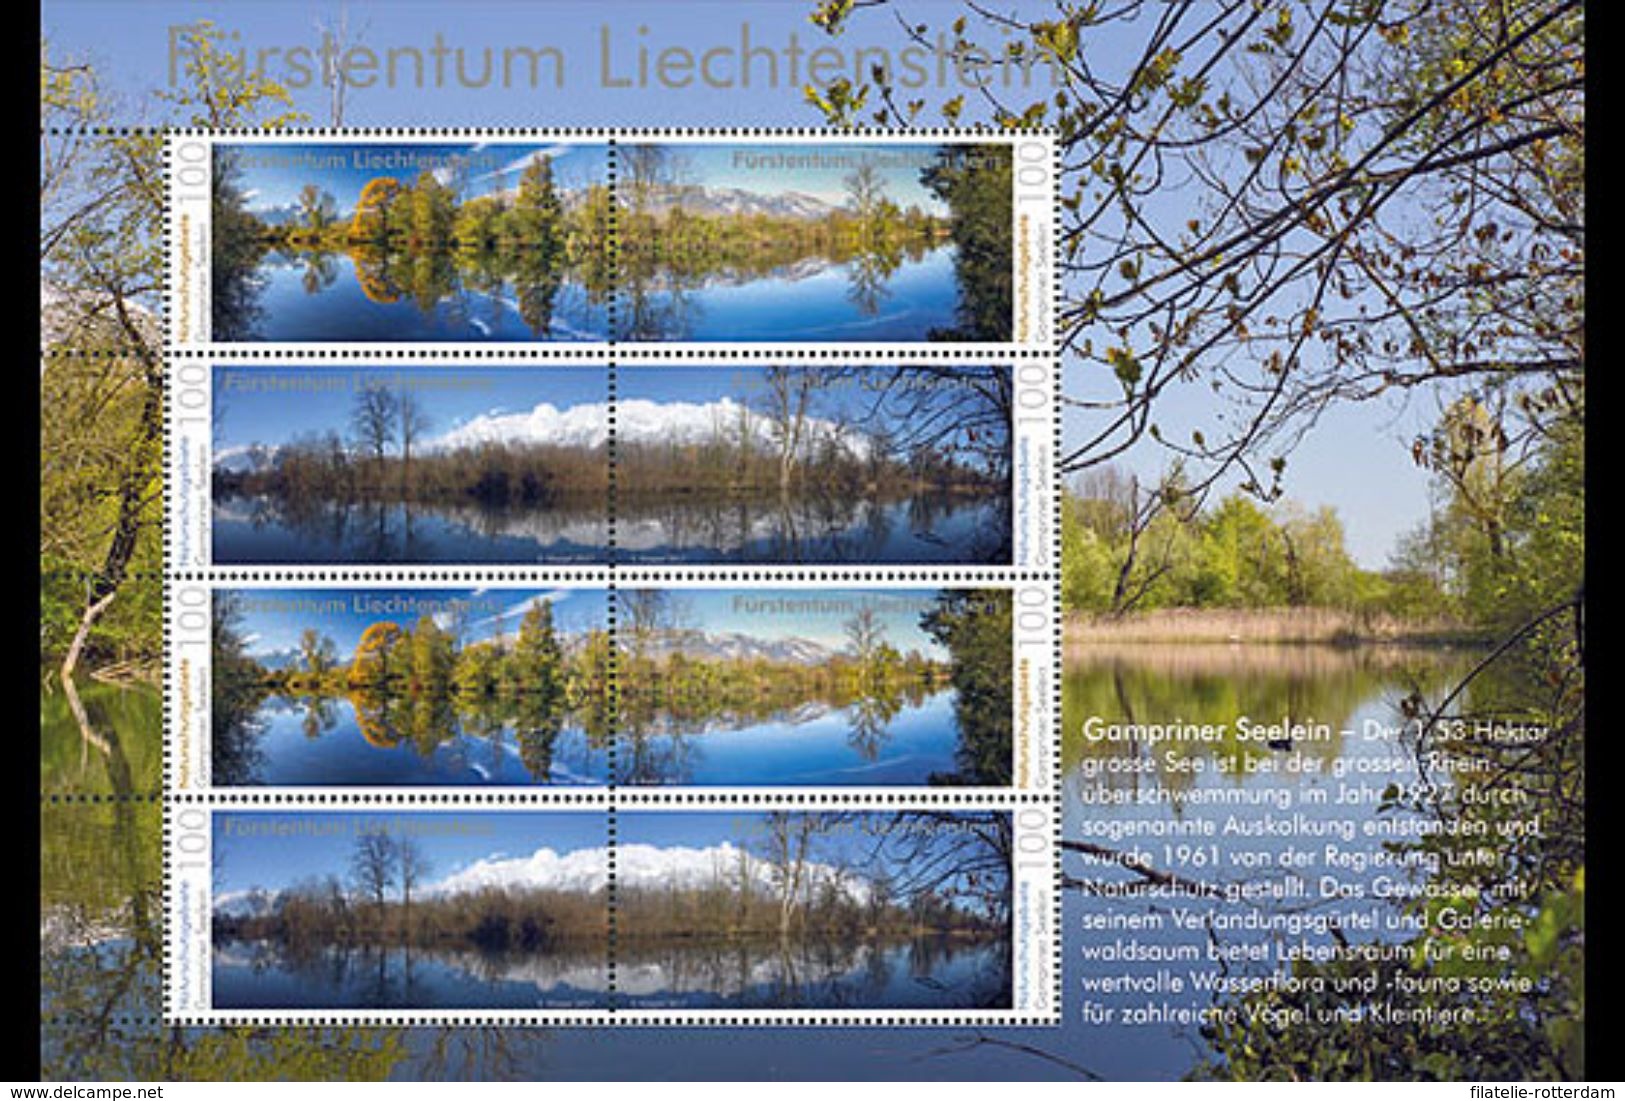 Liechtenstein - Postfris / MNH - Sheet Natuurparken 2017 - Ungebraucht